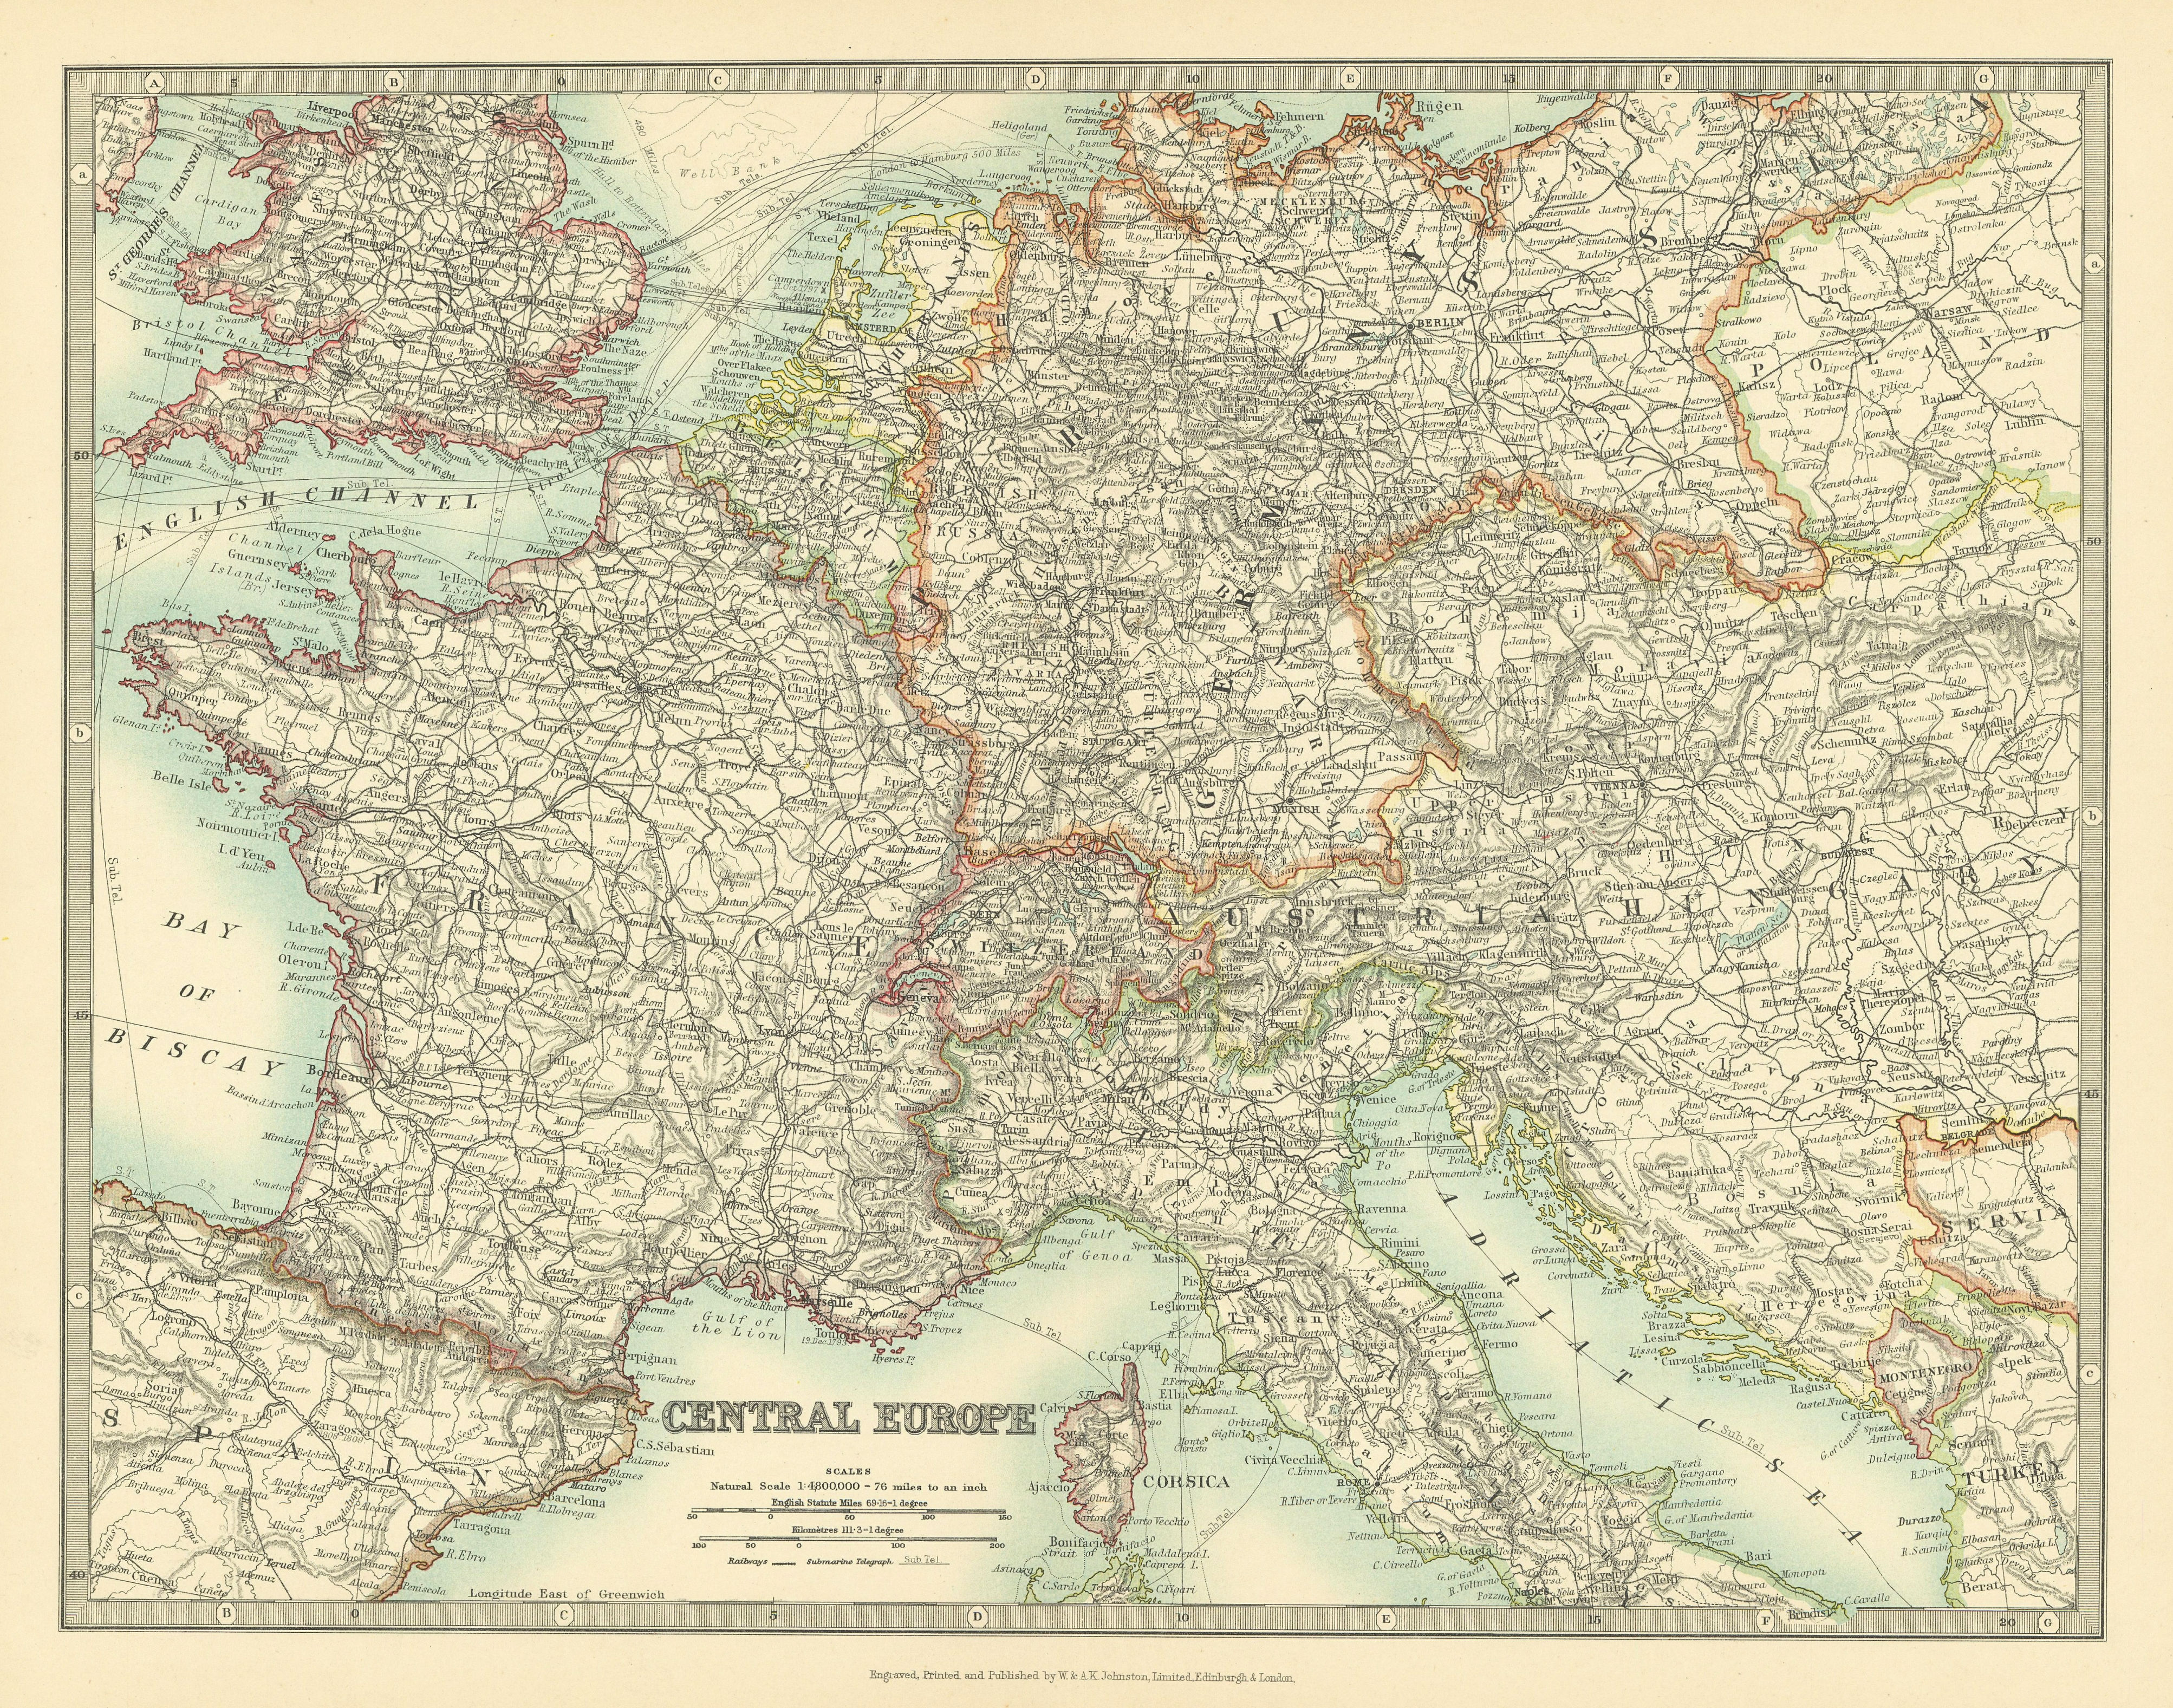 Associate Product CENTRAL EUROPE. France w/o Alsace Lorraine. Austria-Hungary . JOHNSTON 1911 map